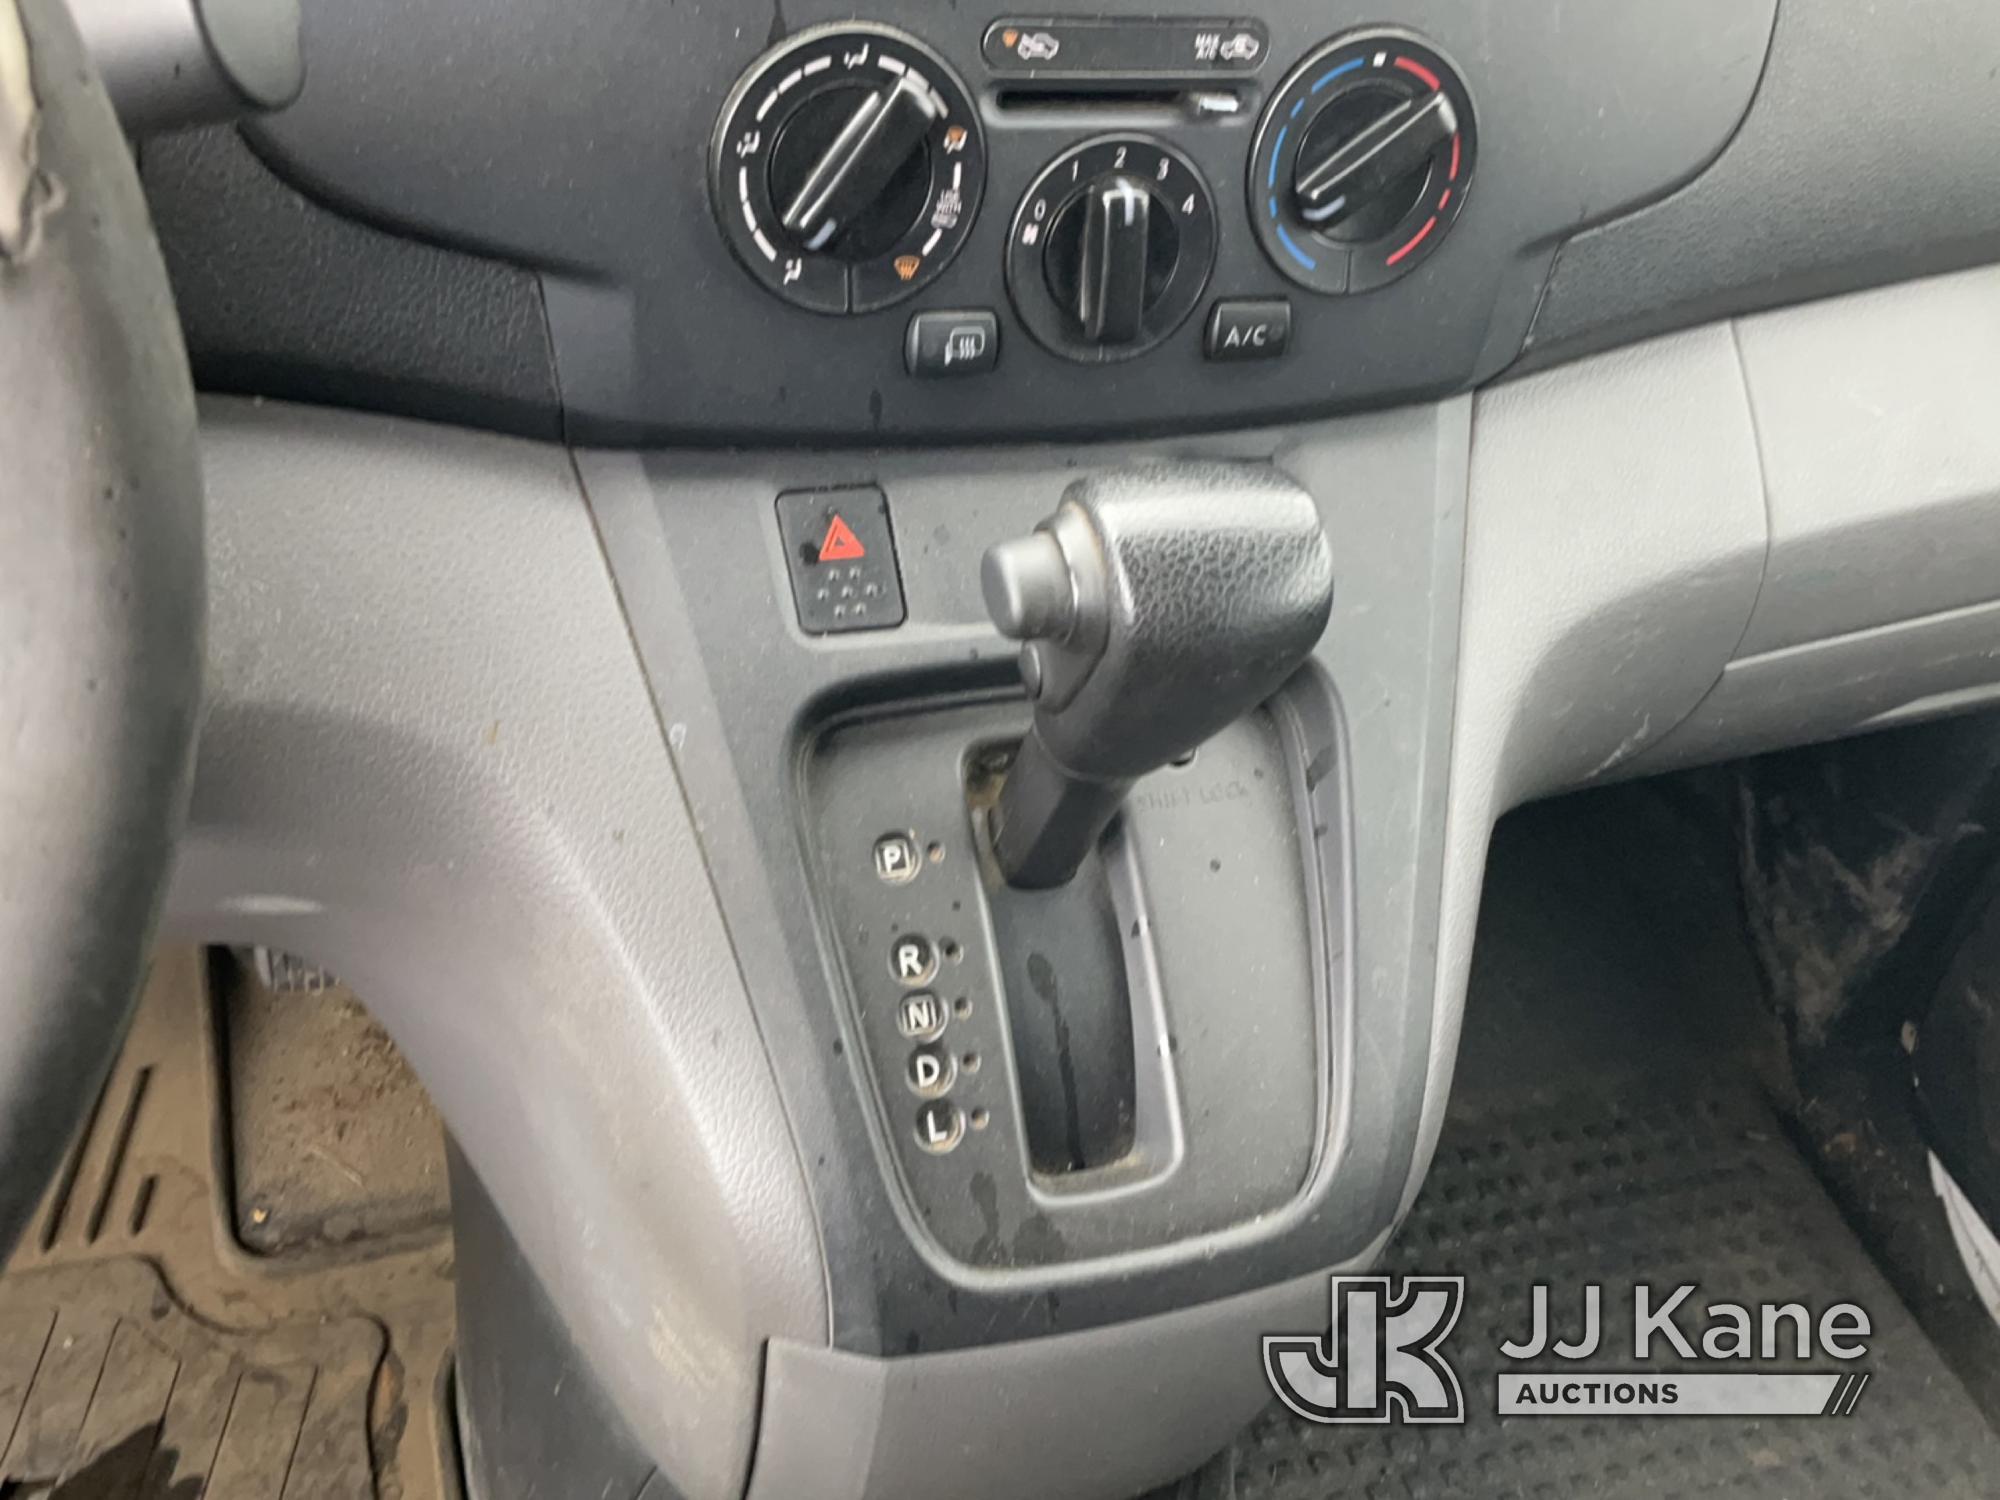 (Jurupa Valley, CA) 2015 Nissan NV200 Mini Passenger Van Runs, Transmission Slips, Must Be Towed, Pa